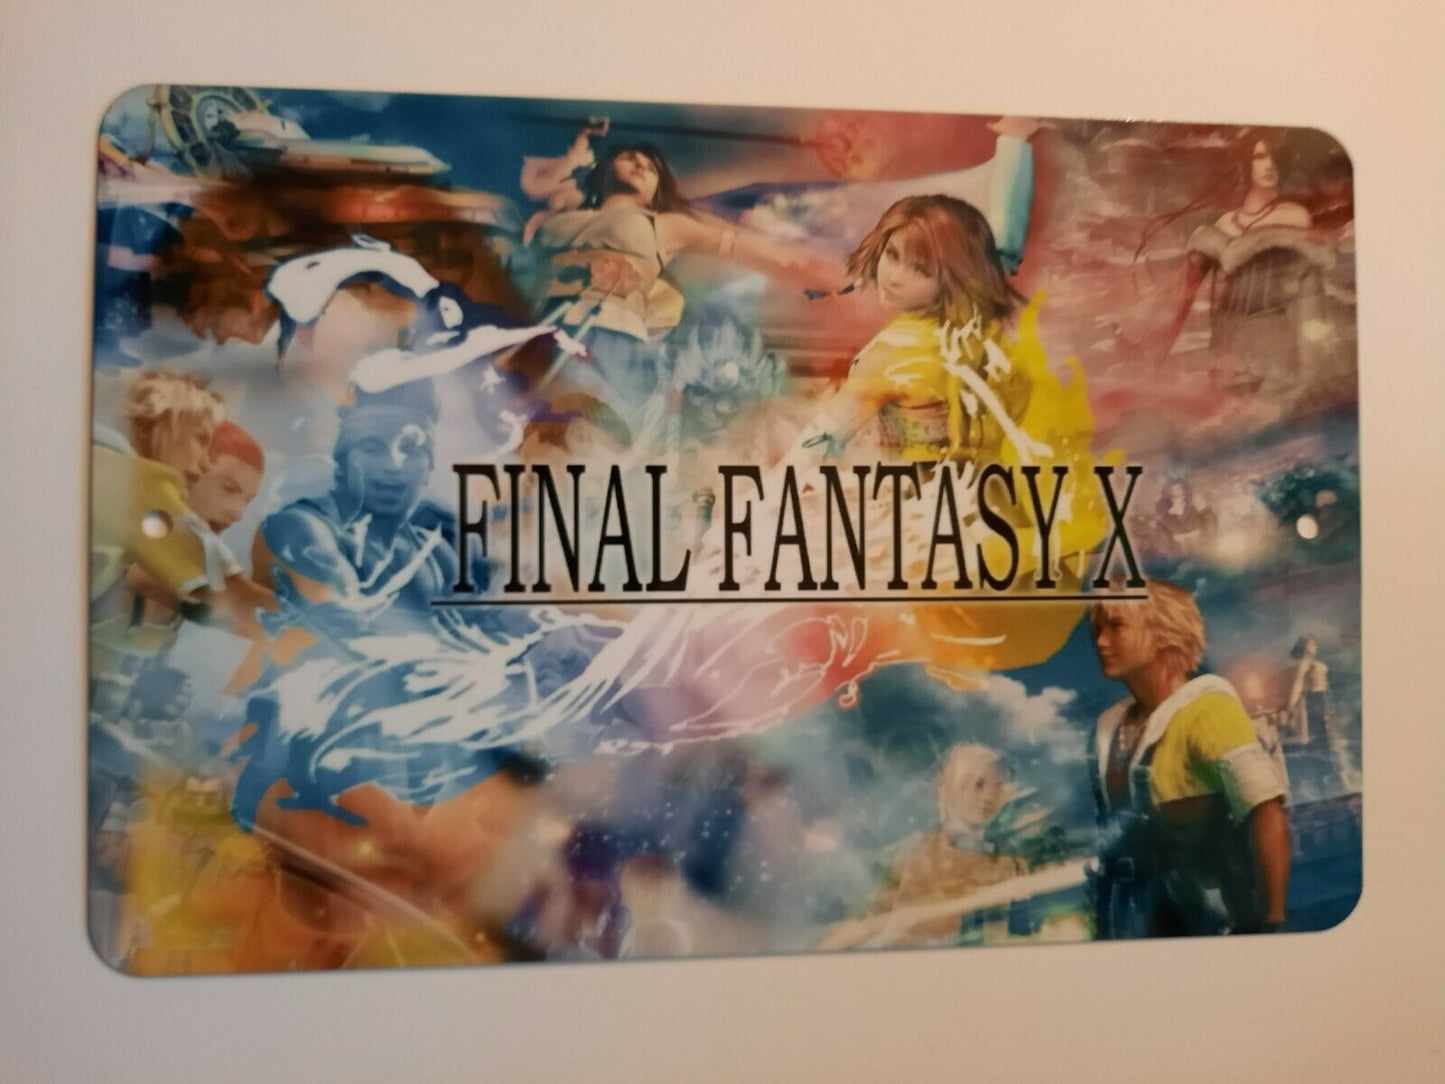 FFX Final Fantasy 10 Video Game 8x12 Metal Wall Sign Arcade